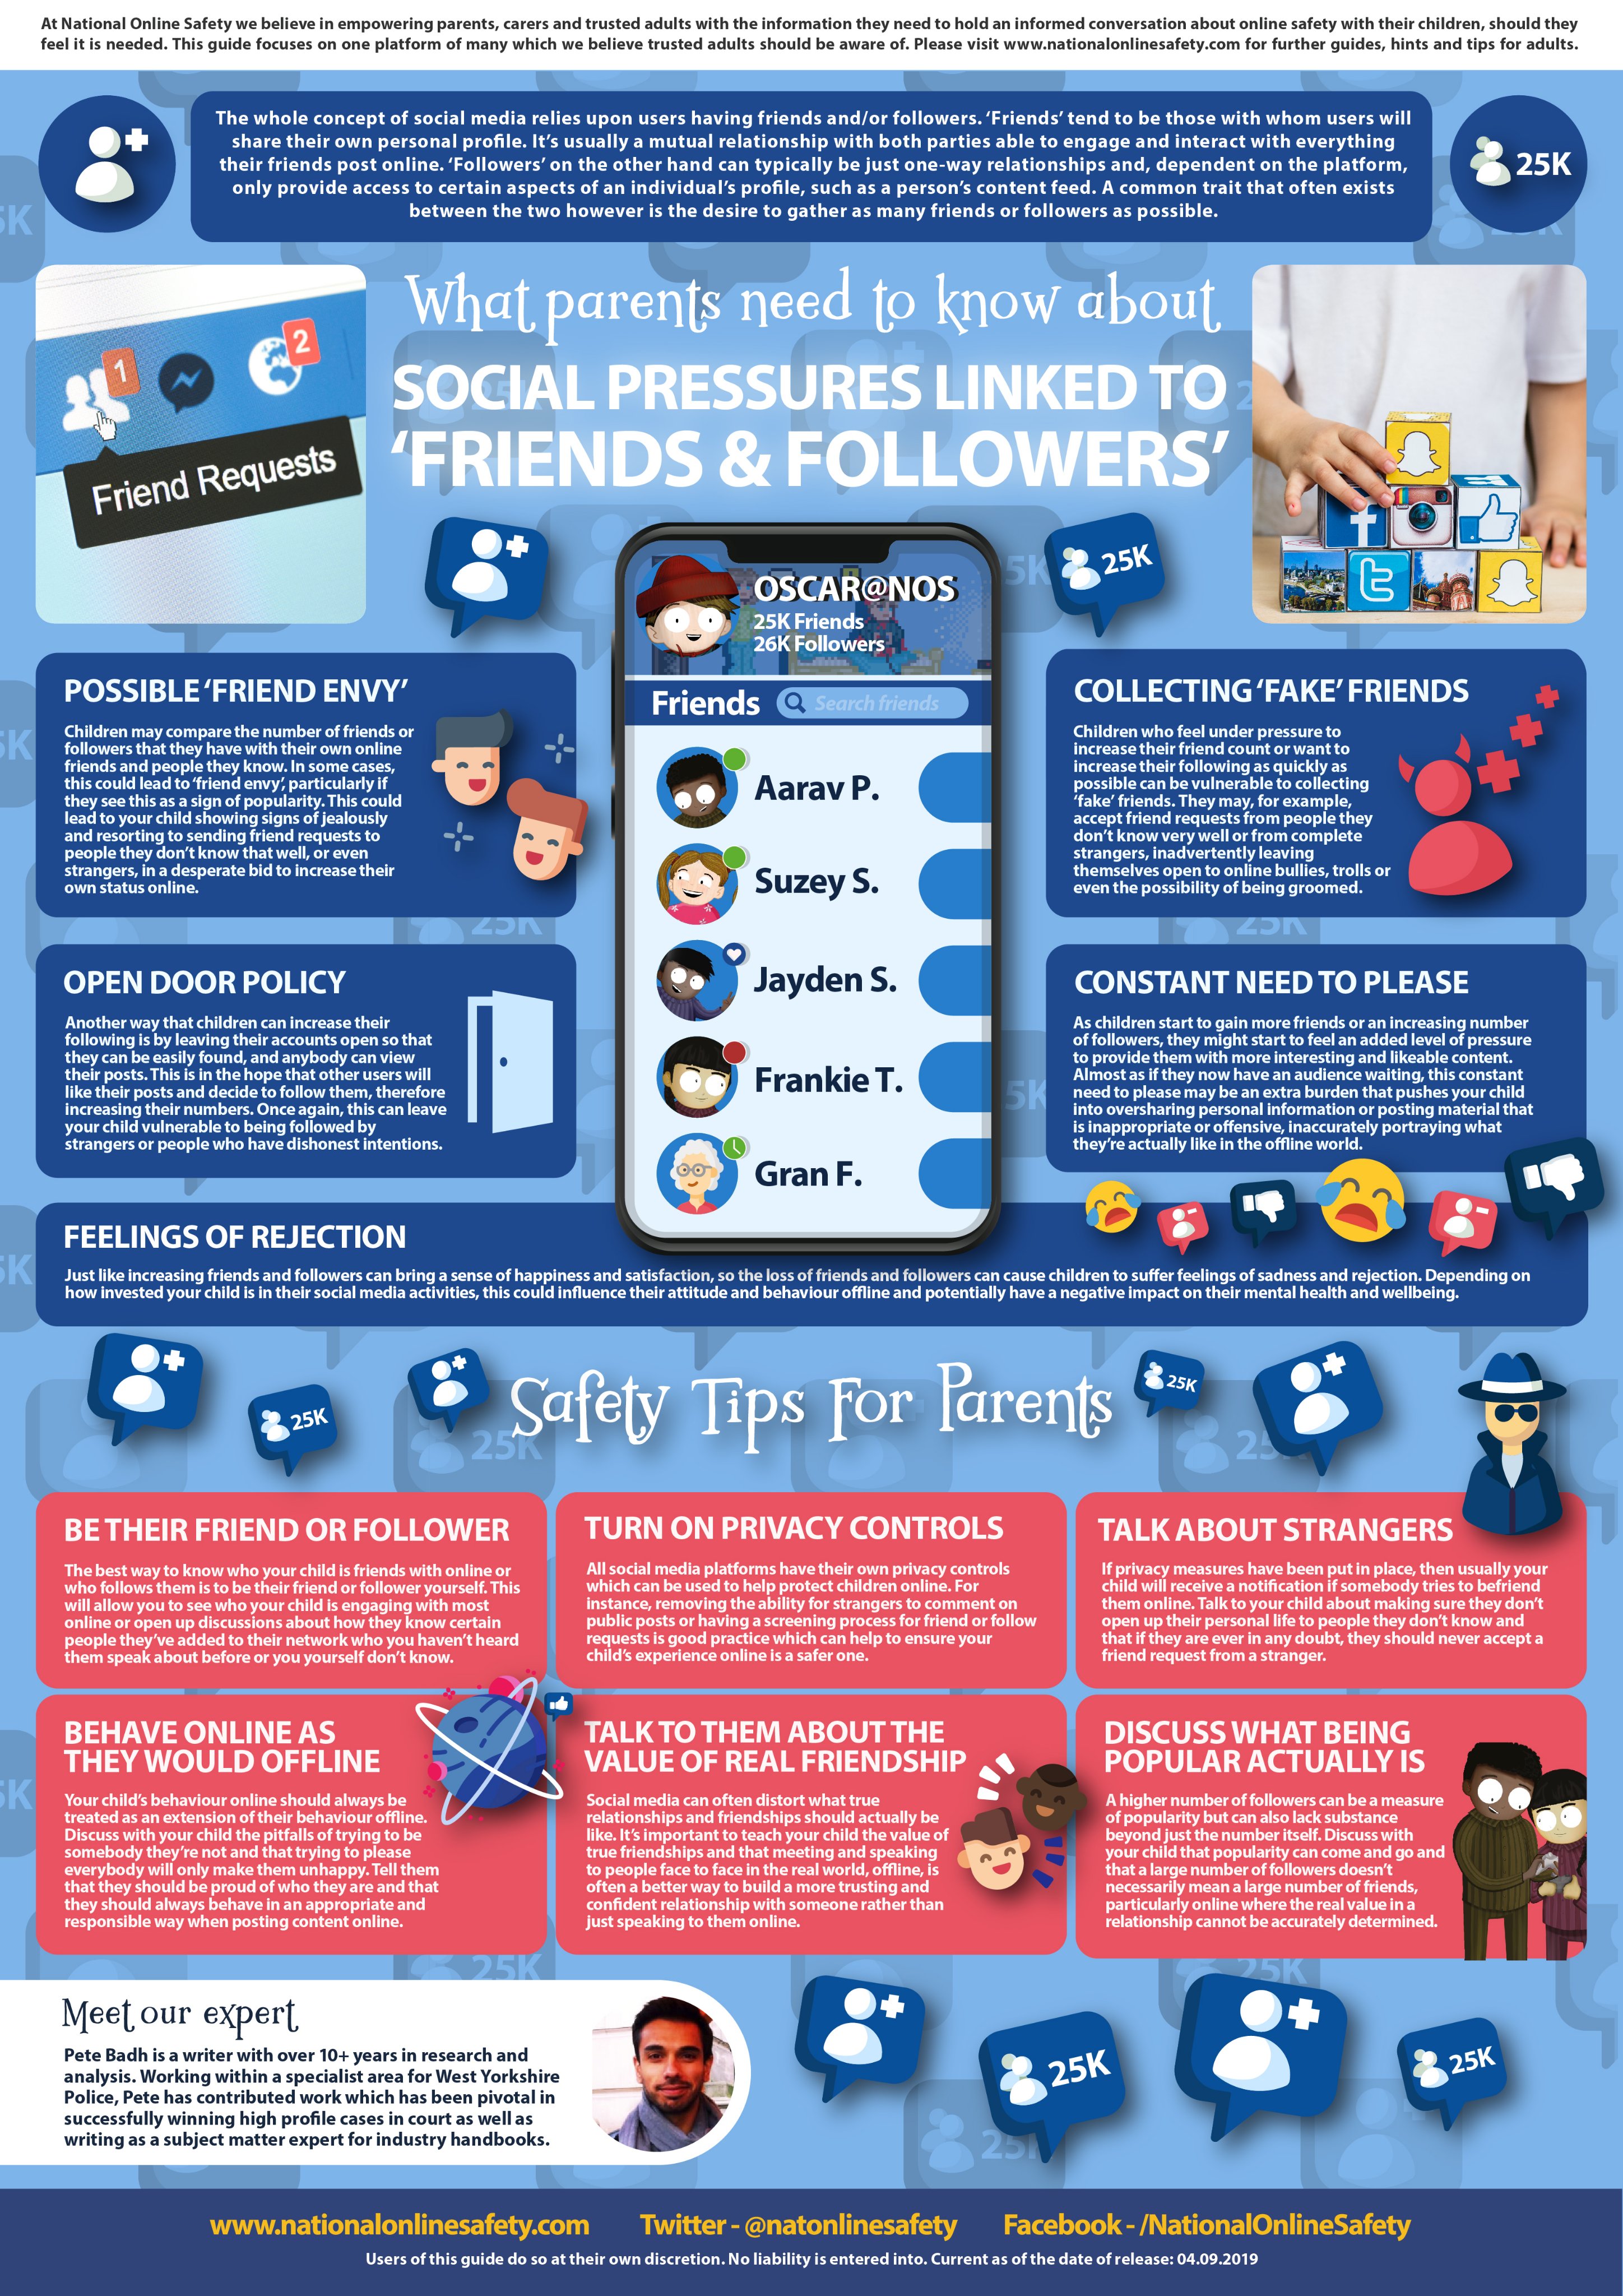 Staying safe online: should you “friend” your kids on social media?